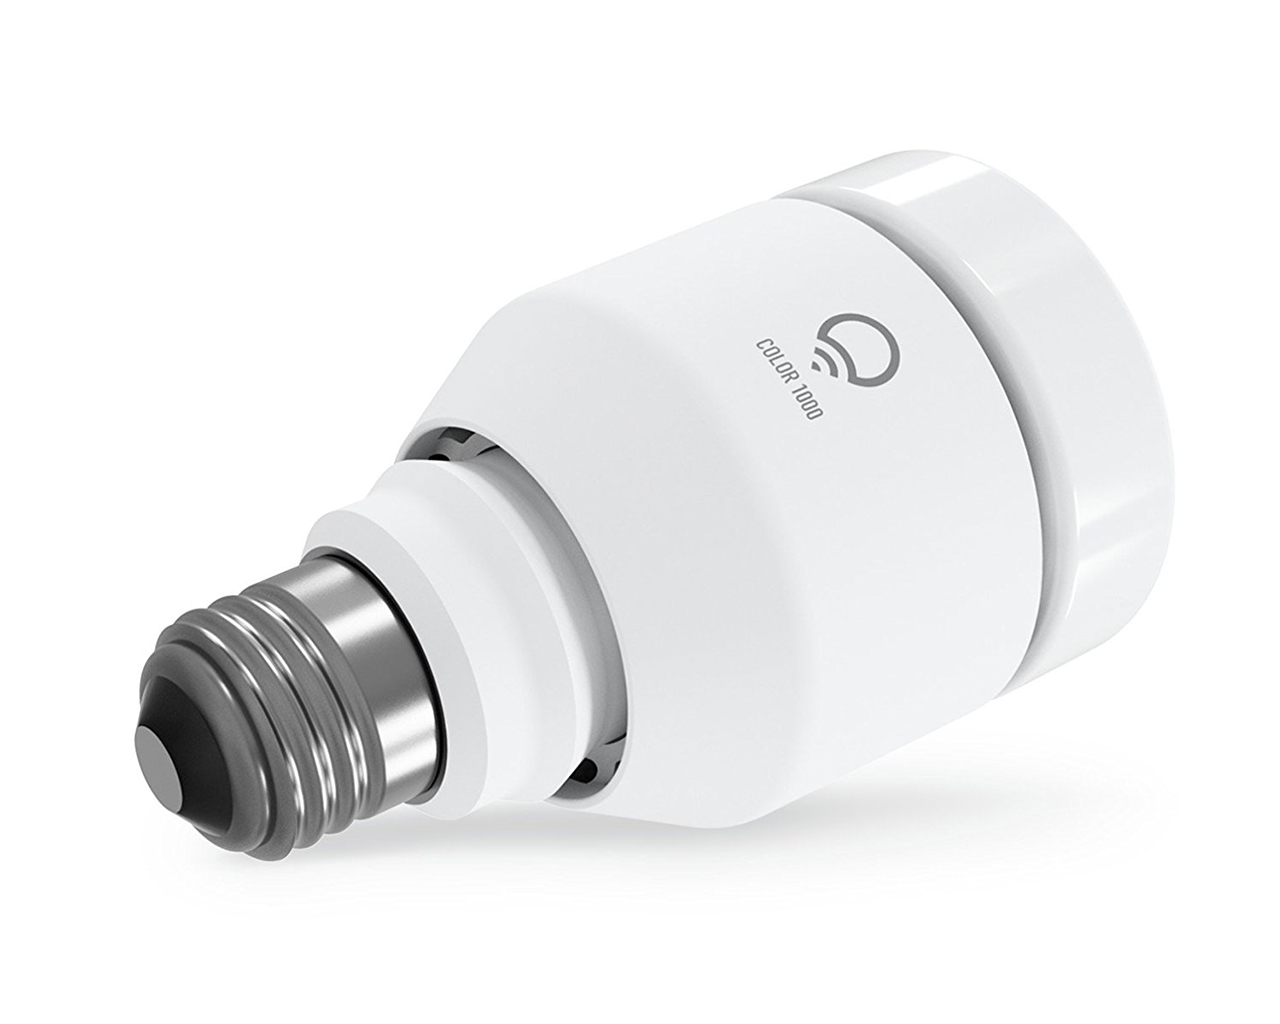 lifx-color-1000-a19-smart-led-light-bulb